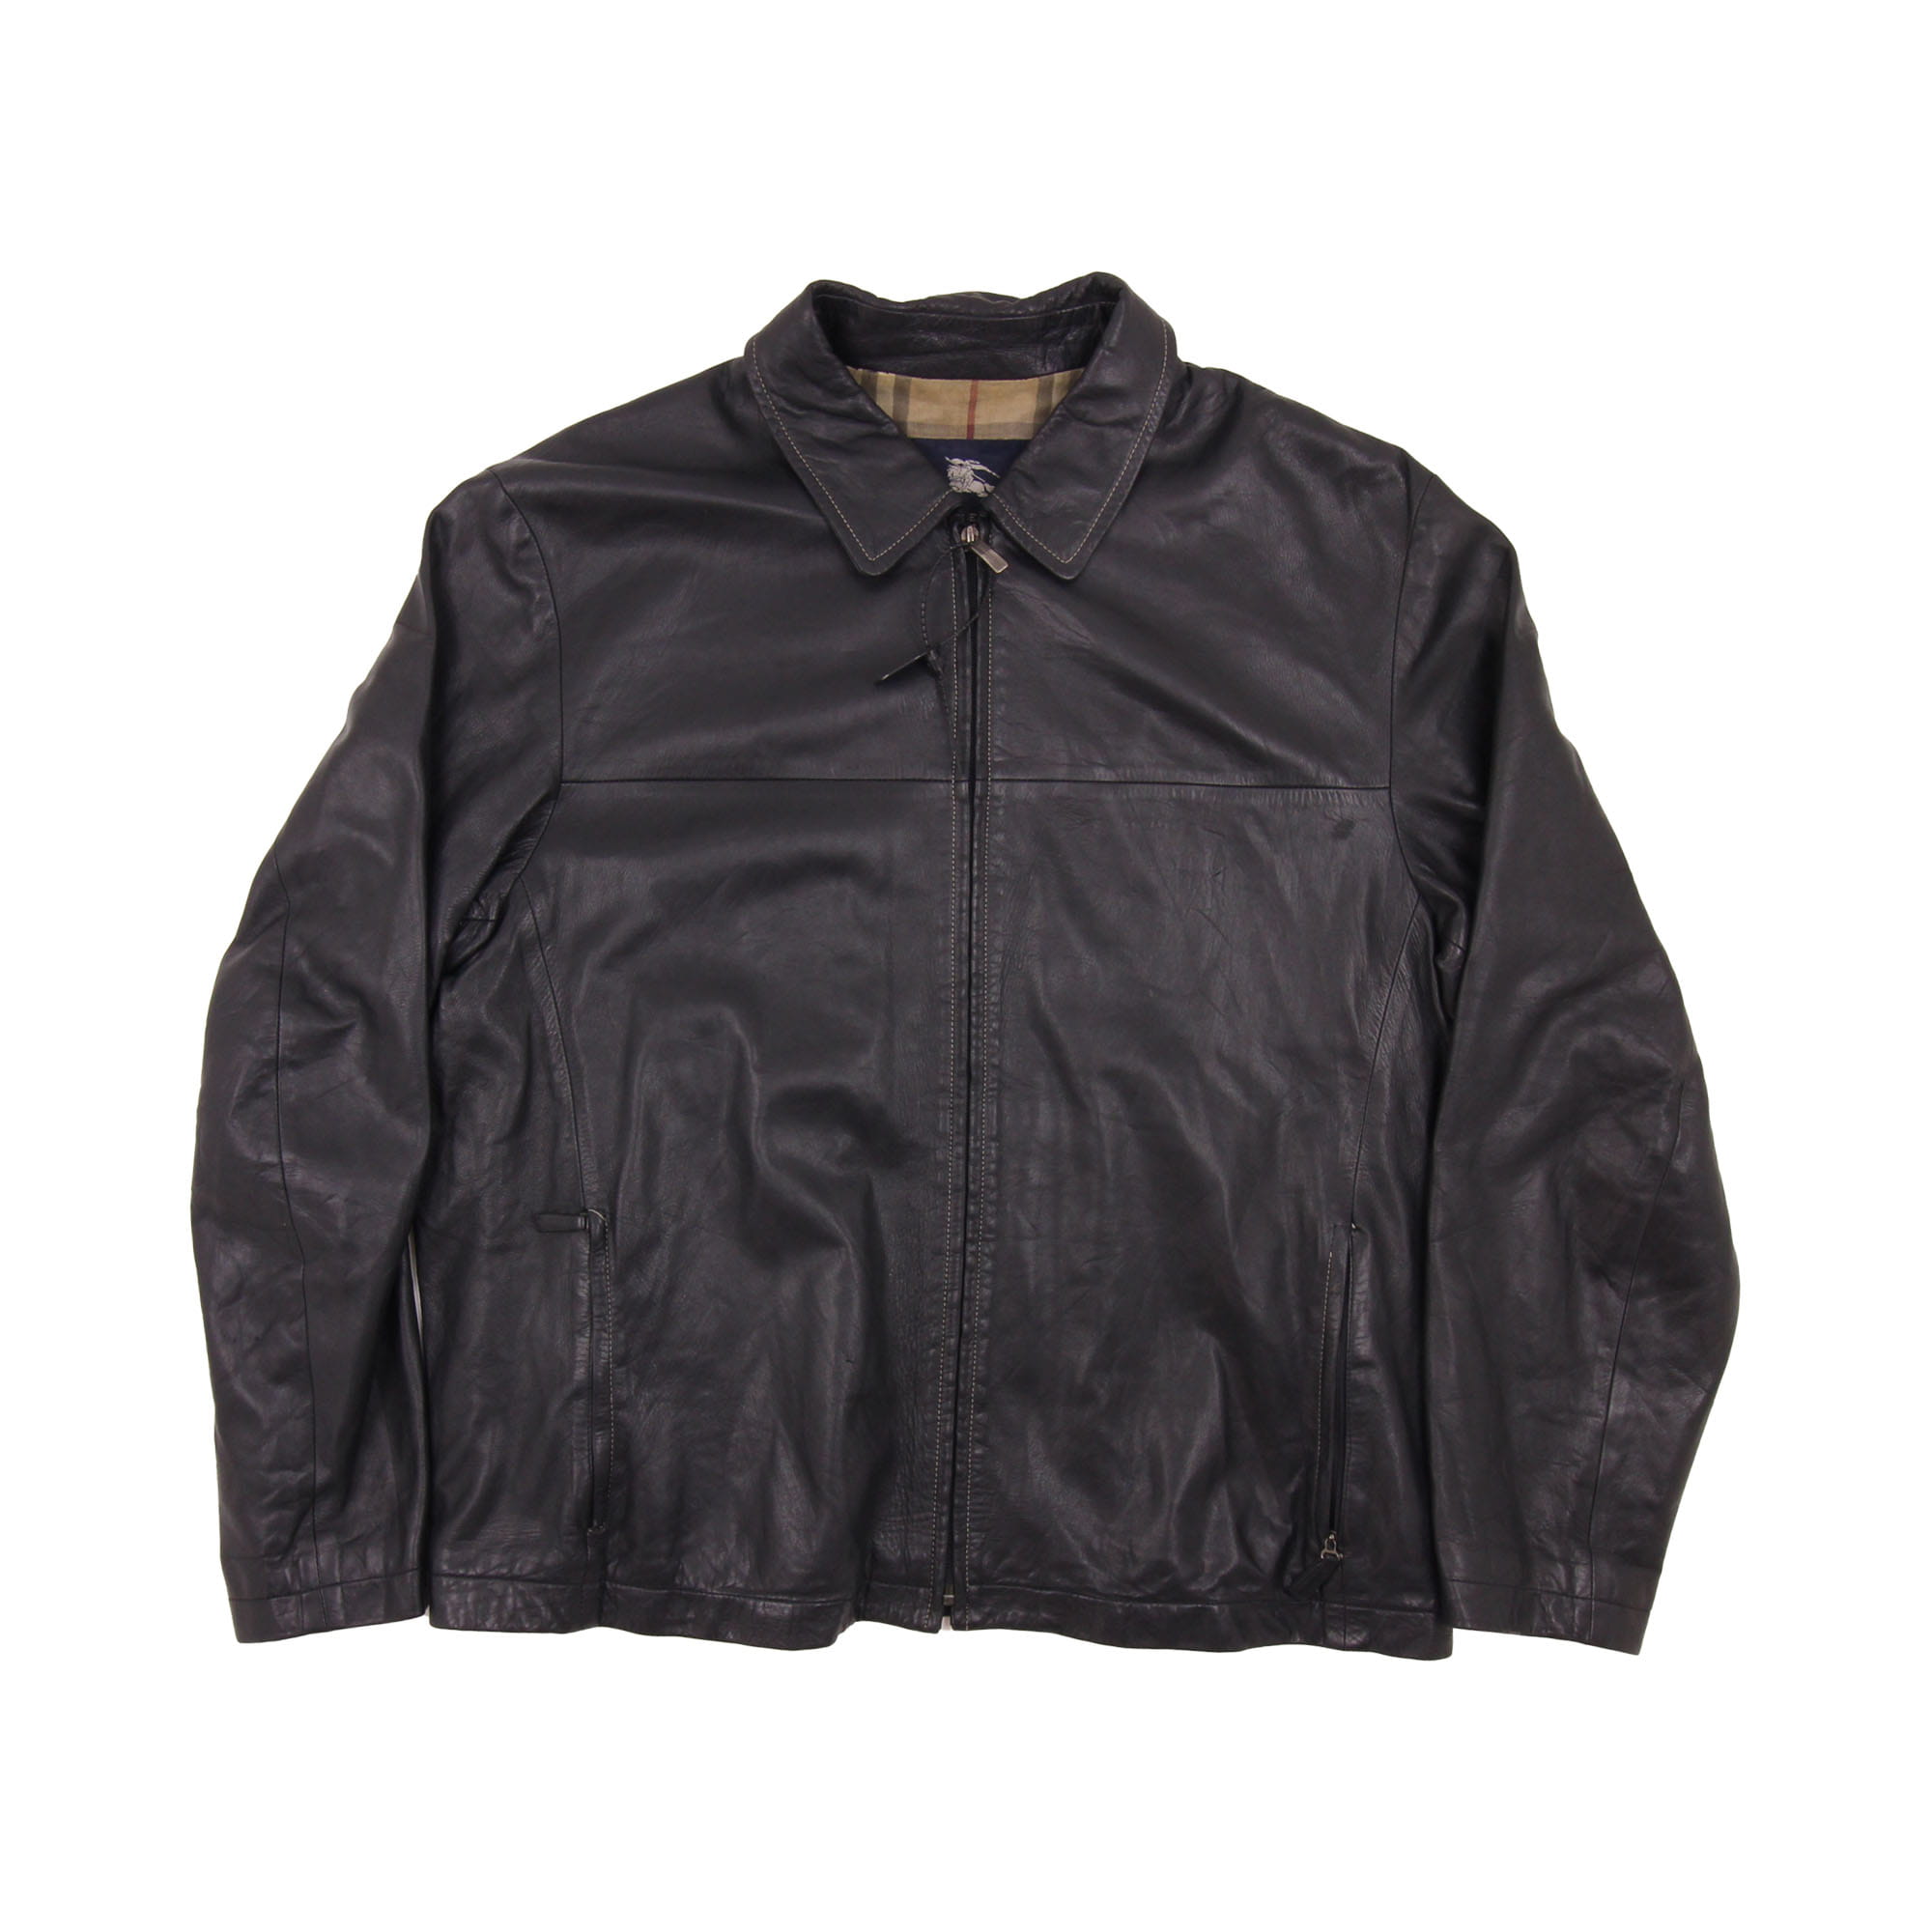 Burberry Leather Jacket Black - L 